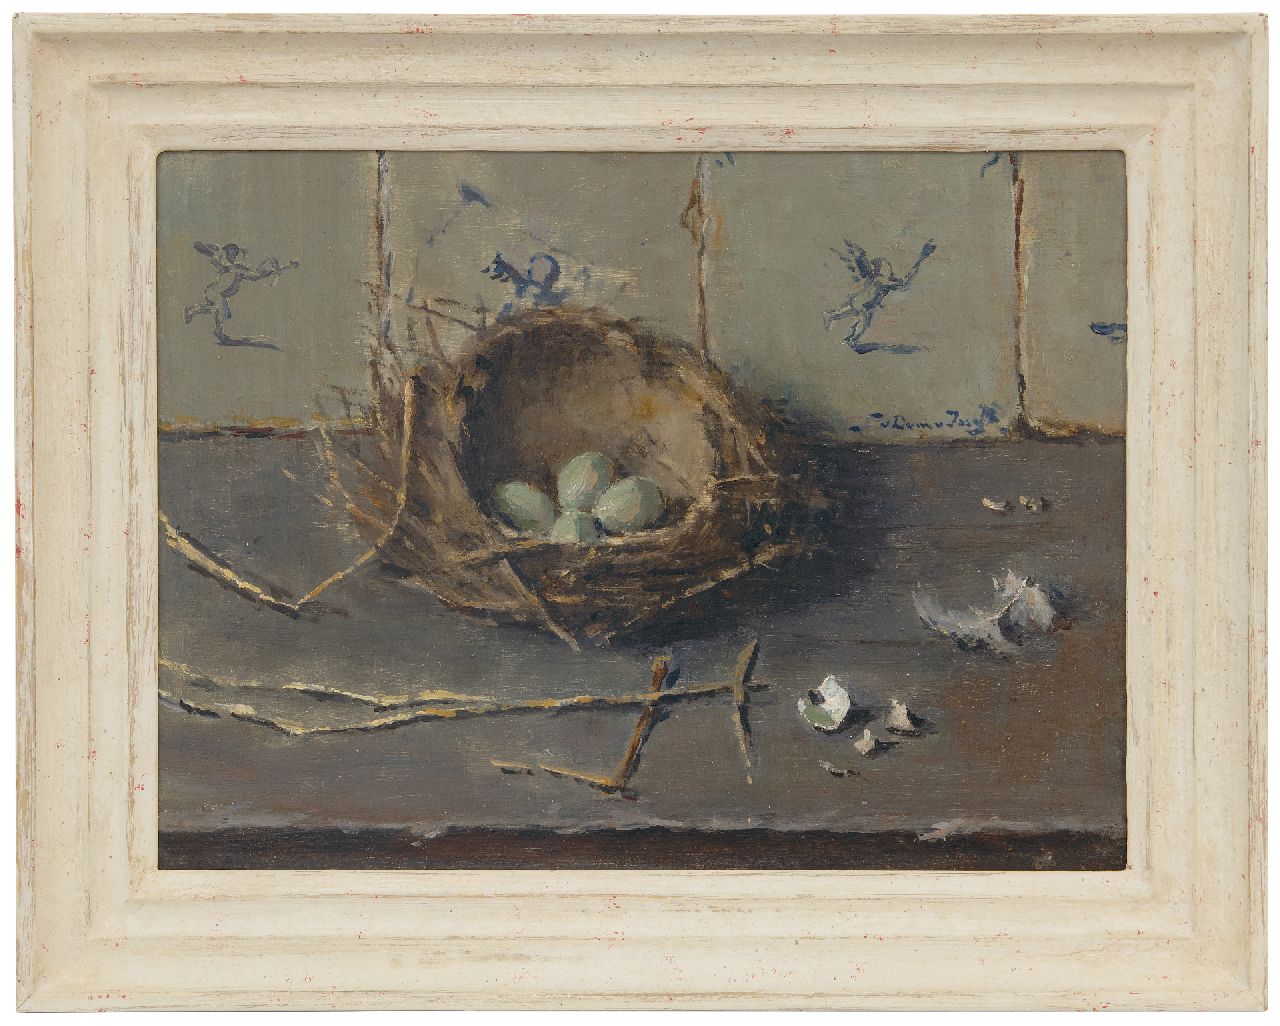 Dam van Isselt L. van | Lucie van Dam van Isselt, Eggs in a bird's nest against a background of old Dutch tiles, oil on panel 30.1 x 40.2 cm, signed c.r.